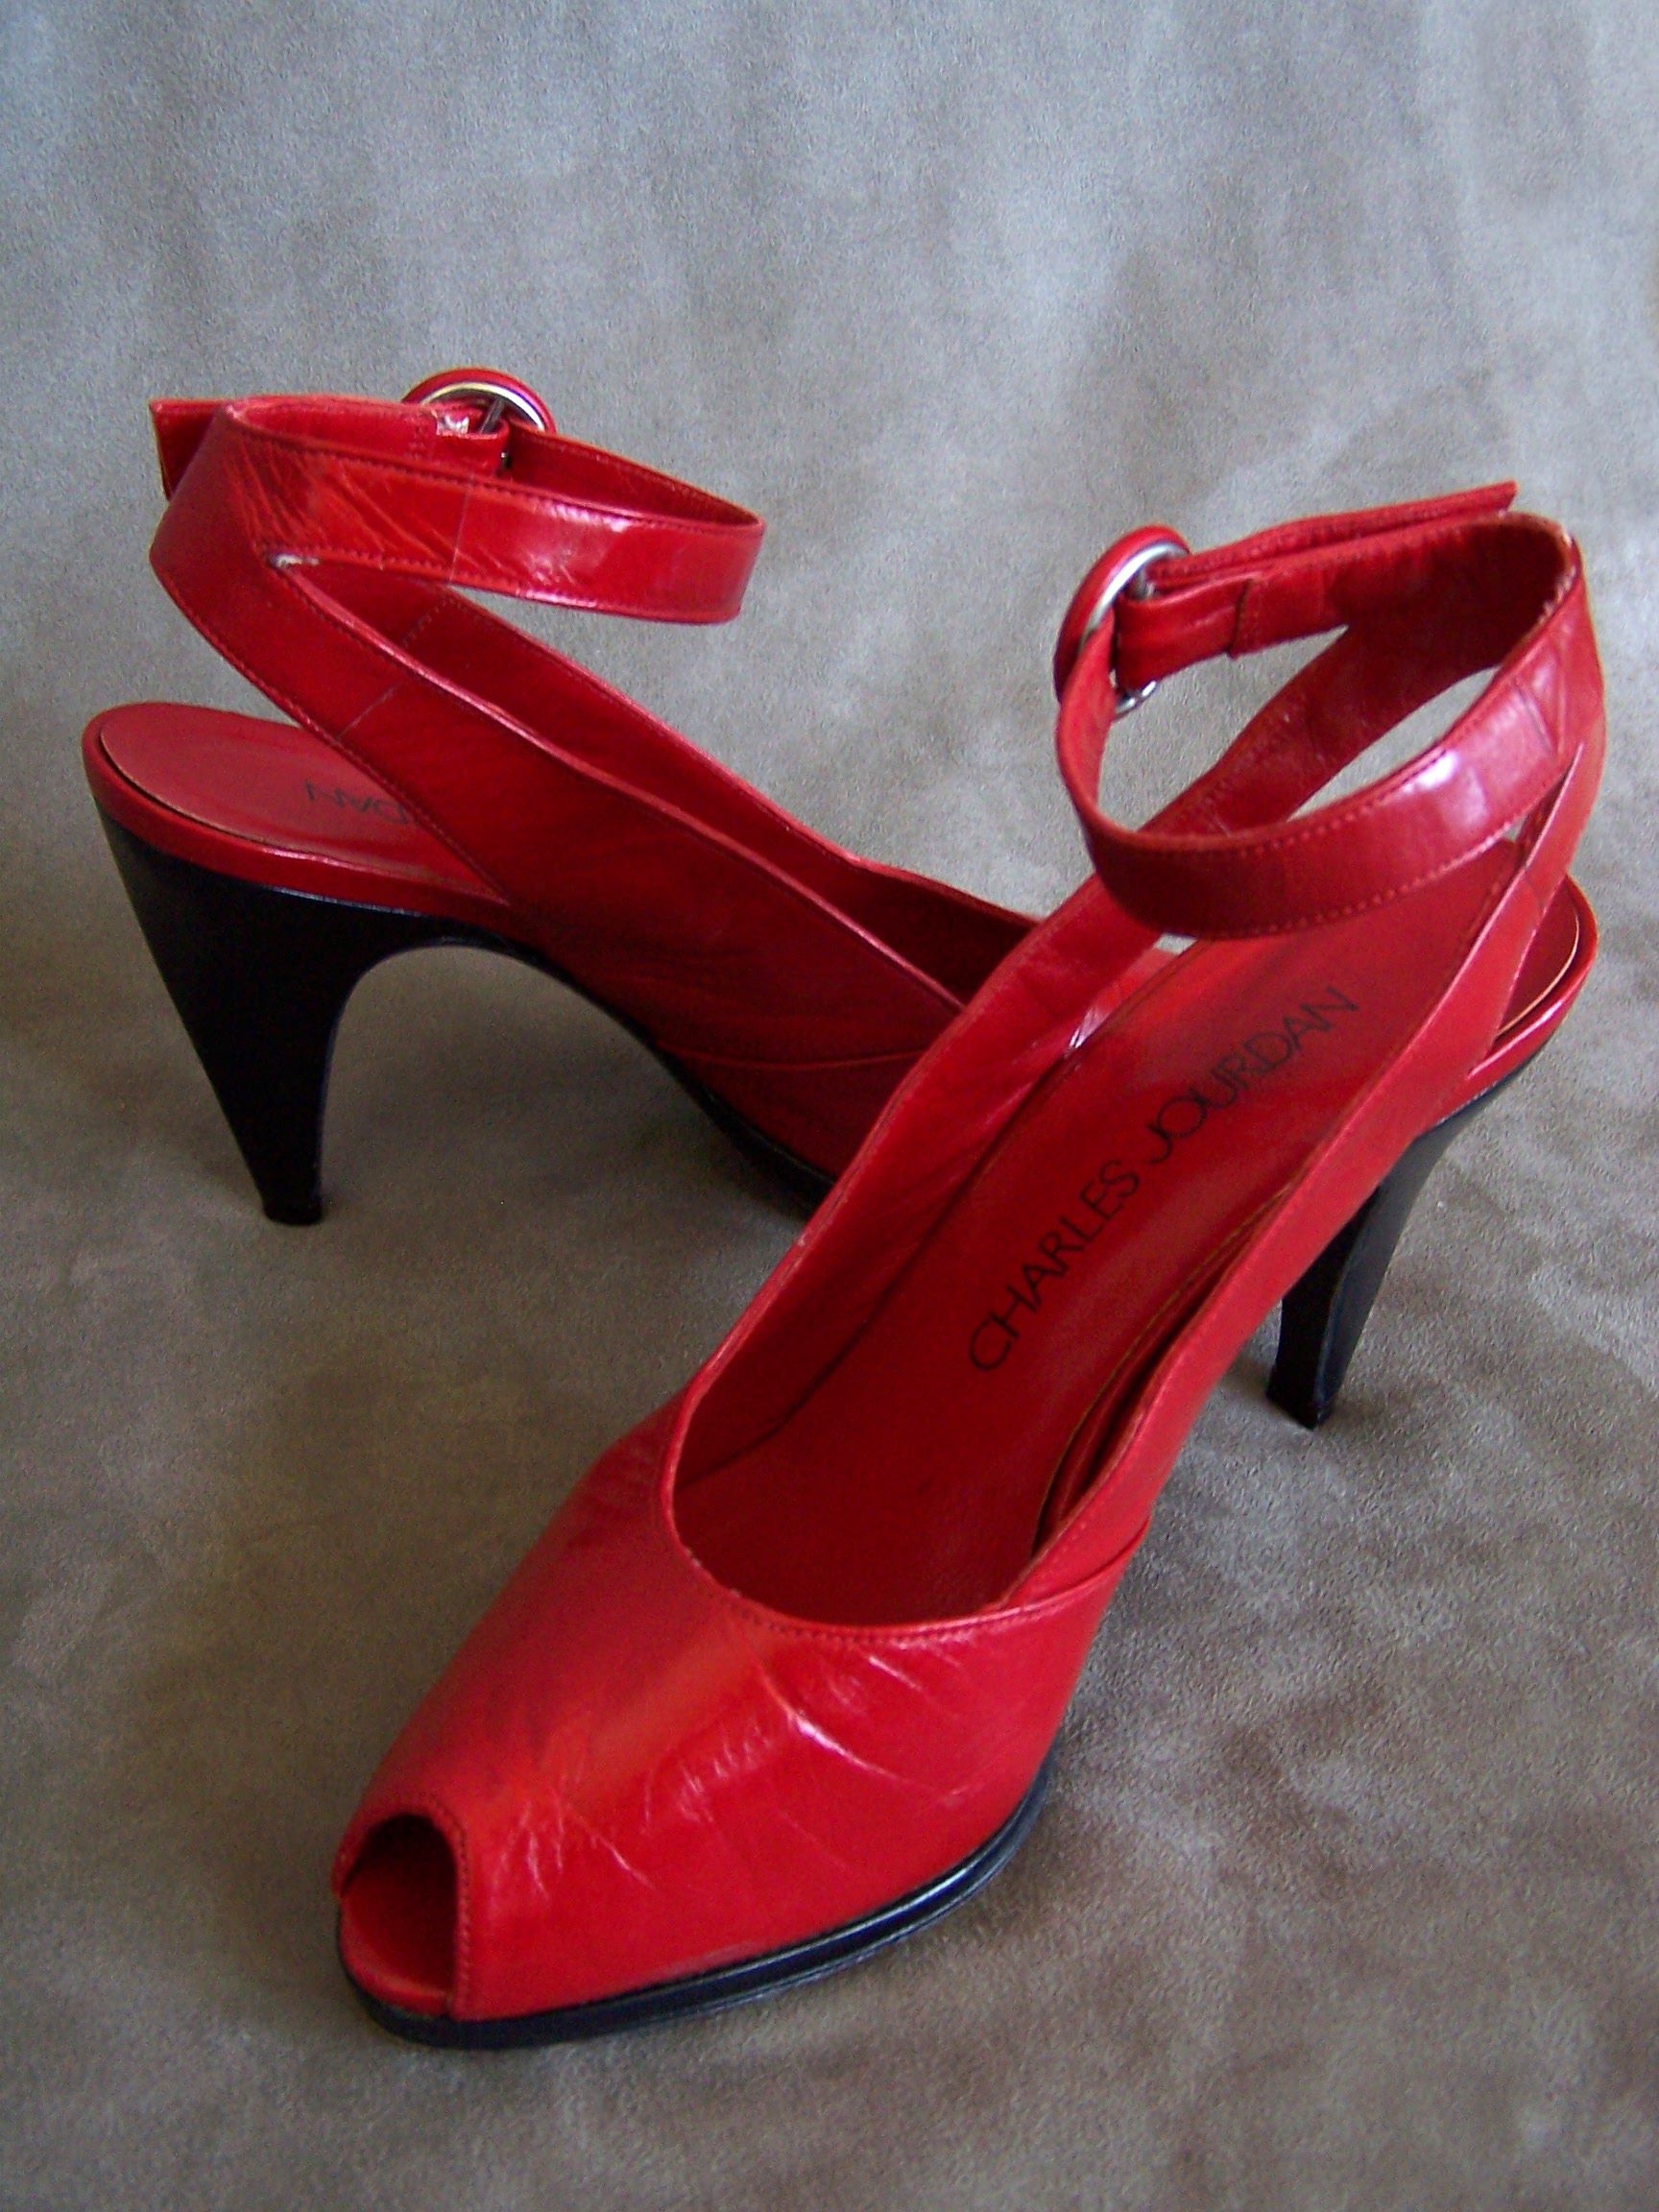 Sz 6 5 M Charles Jourdan Classic Red Black Leather Peeptoe Heels Pumps